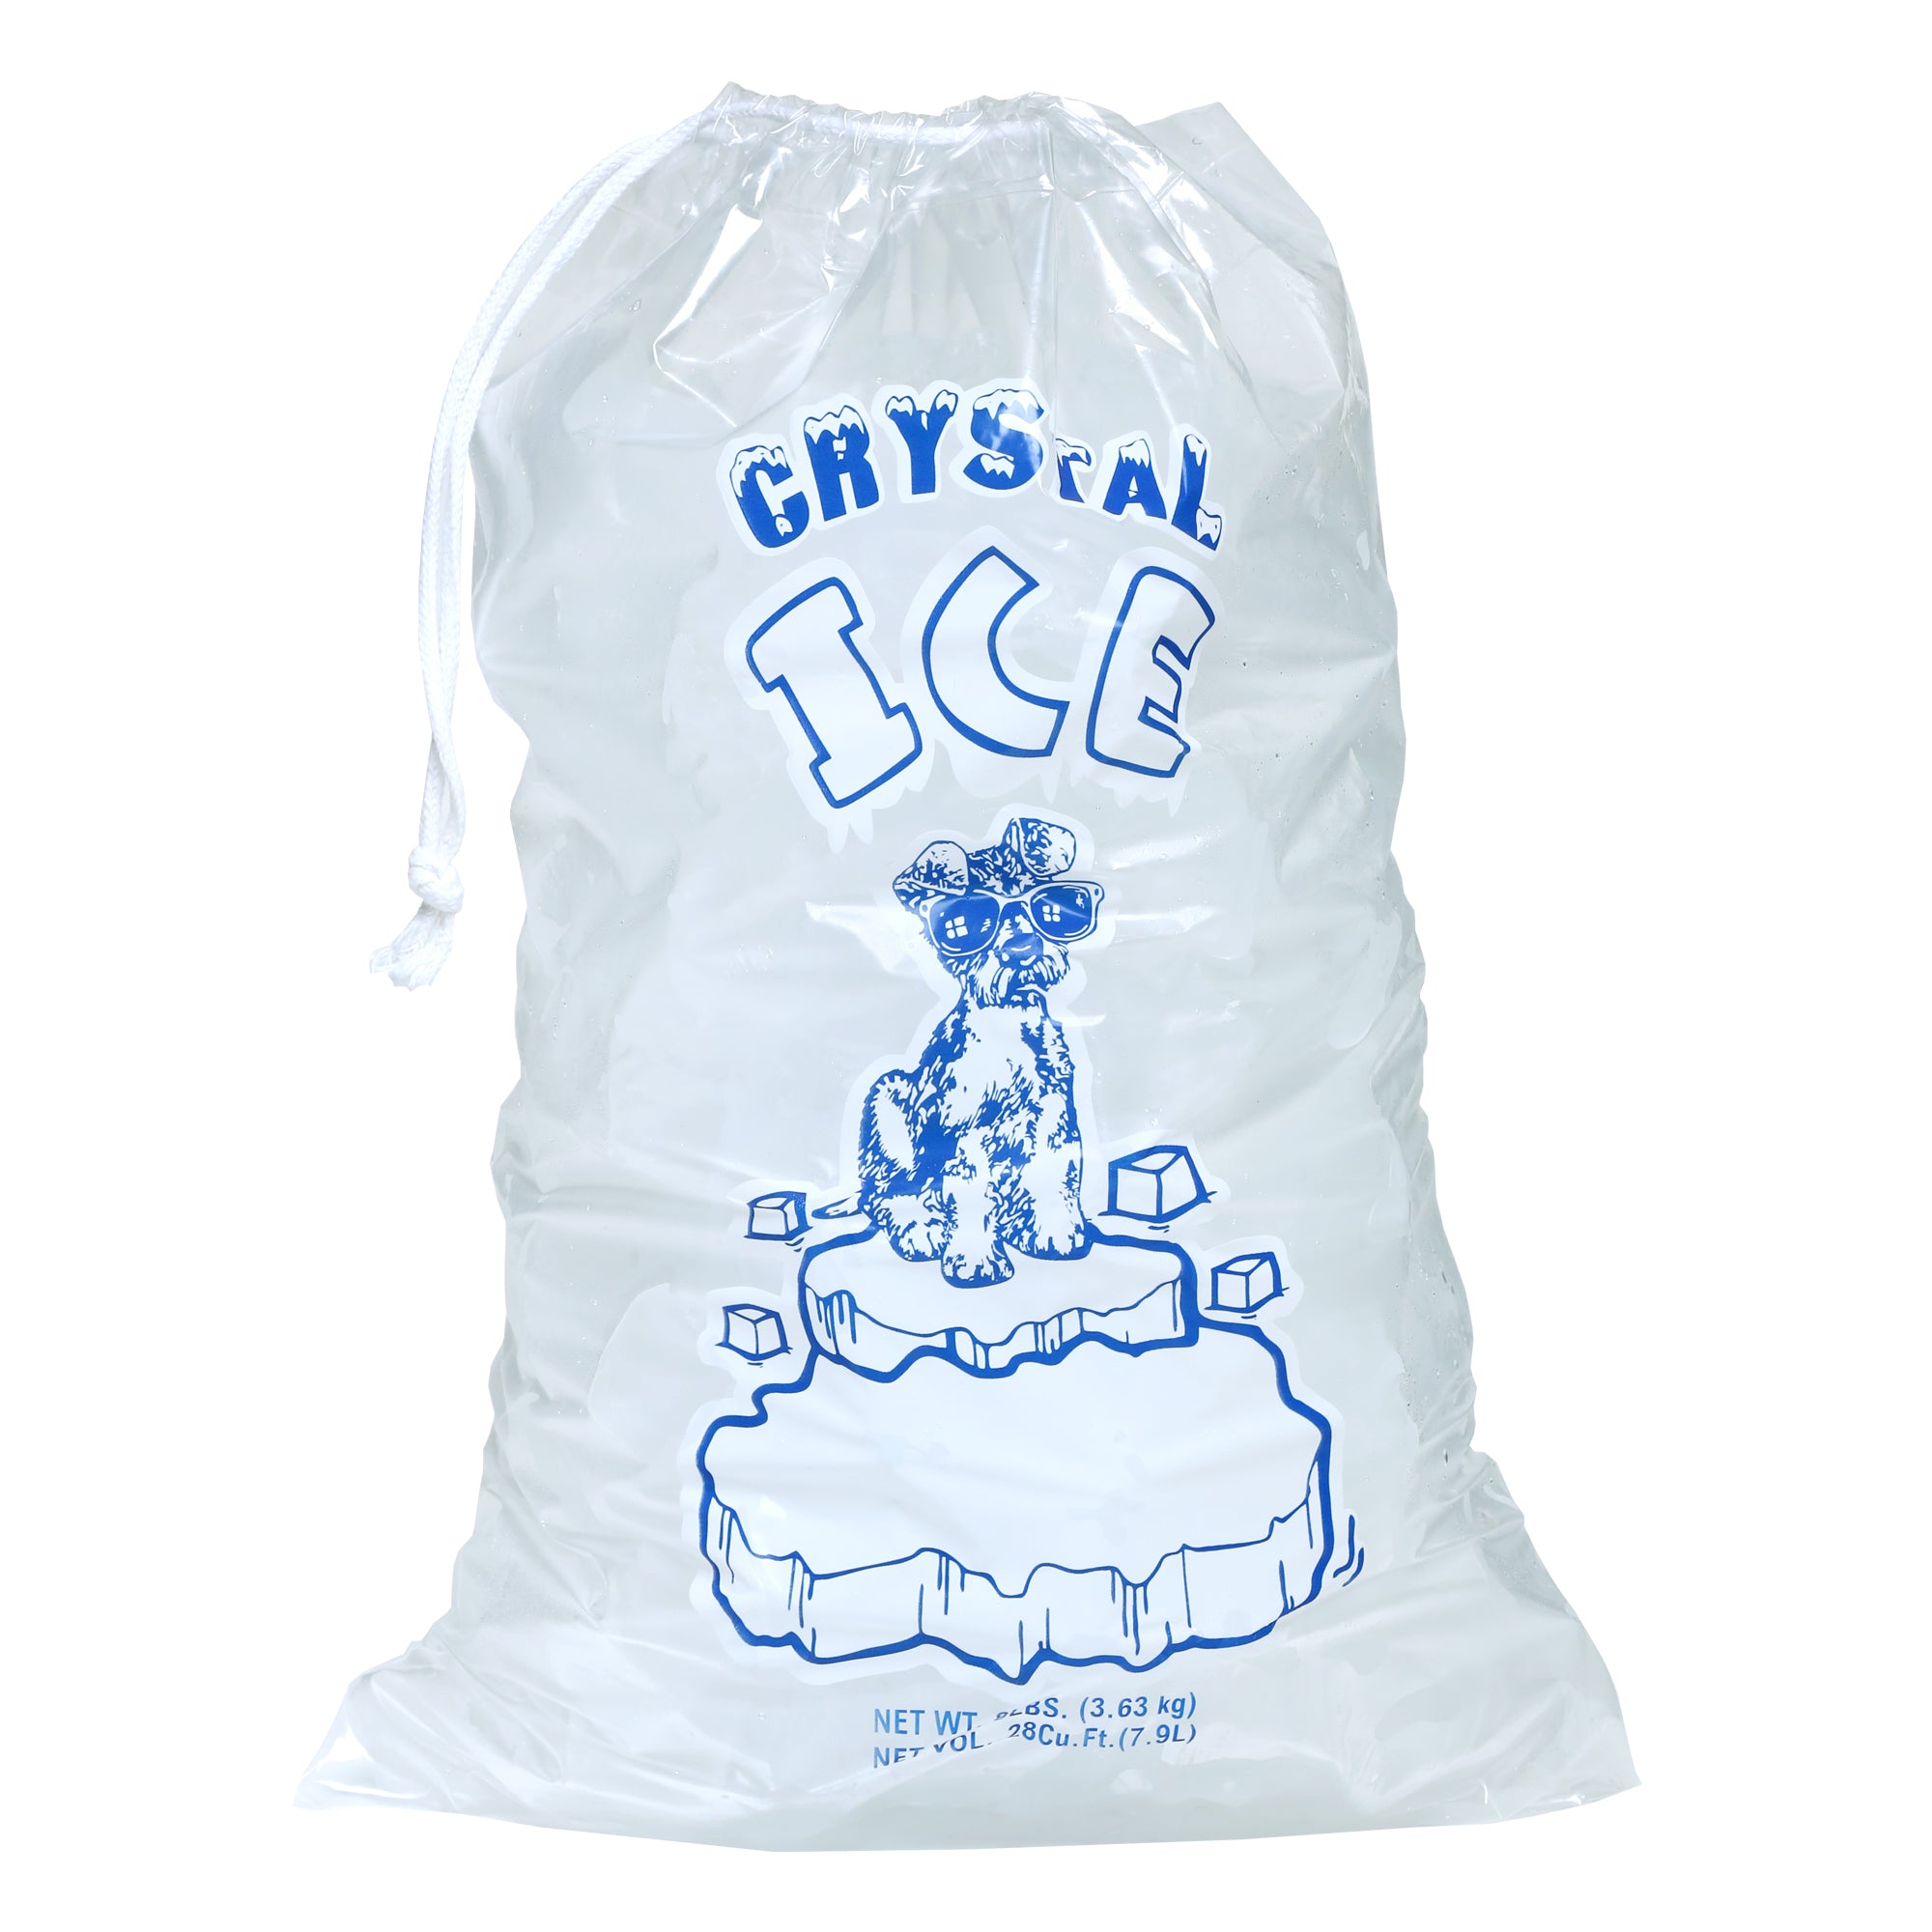 8 lbs crystal ice bag with cotton drawstring 